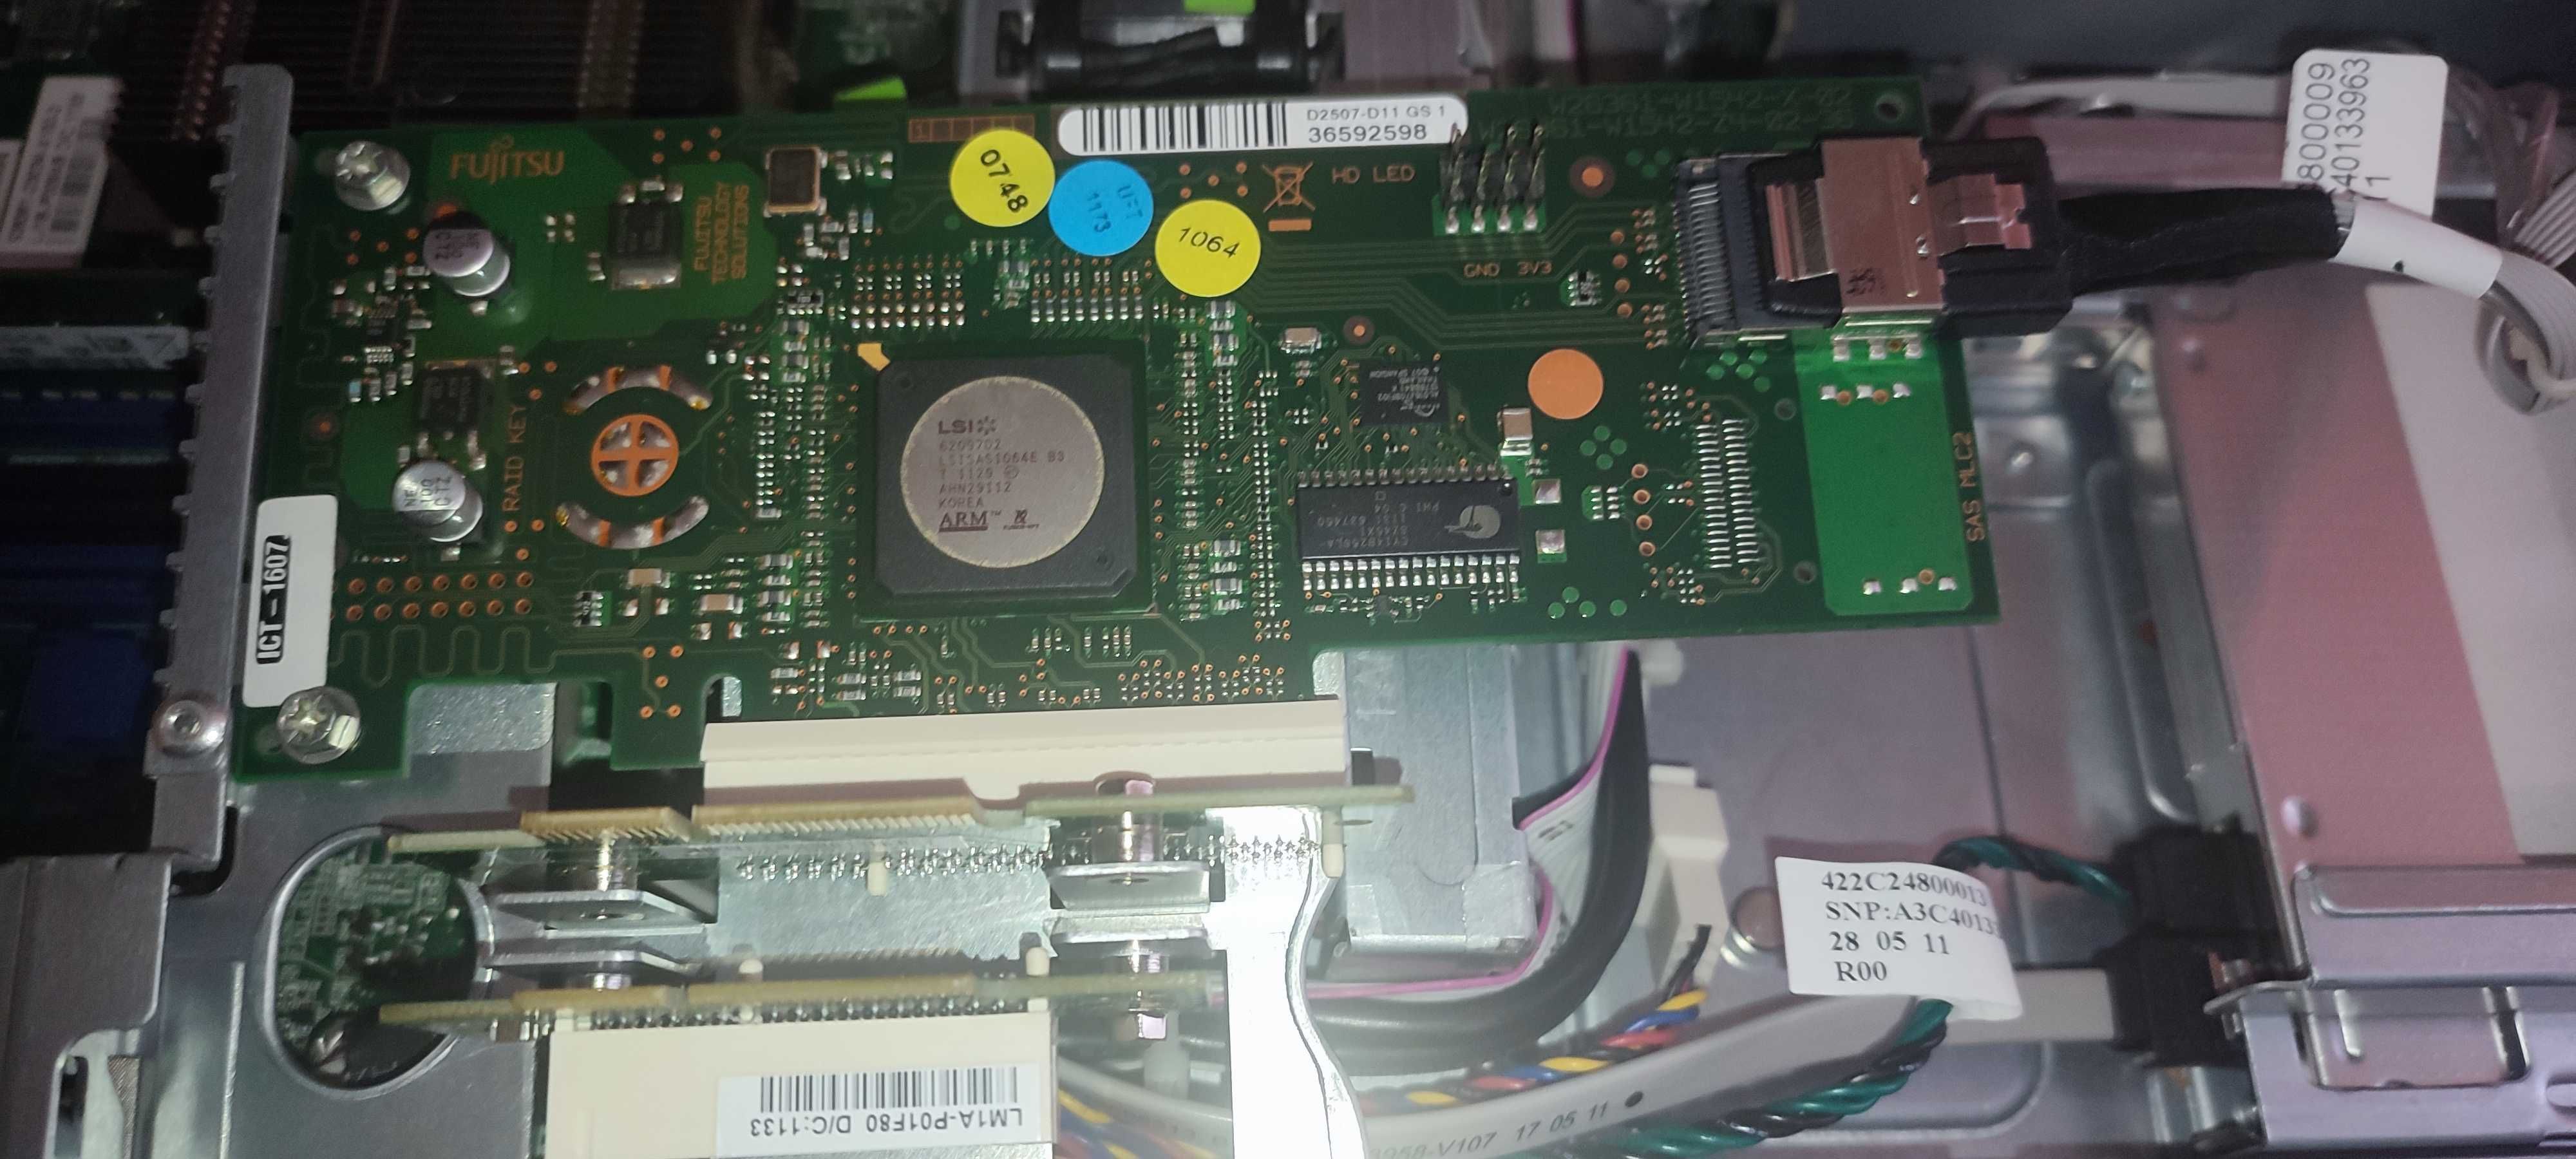 Сервер Fujitsu primergy rx100 s7 cpu i3-2130, 4gb ram ddr3, no hdd